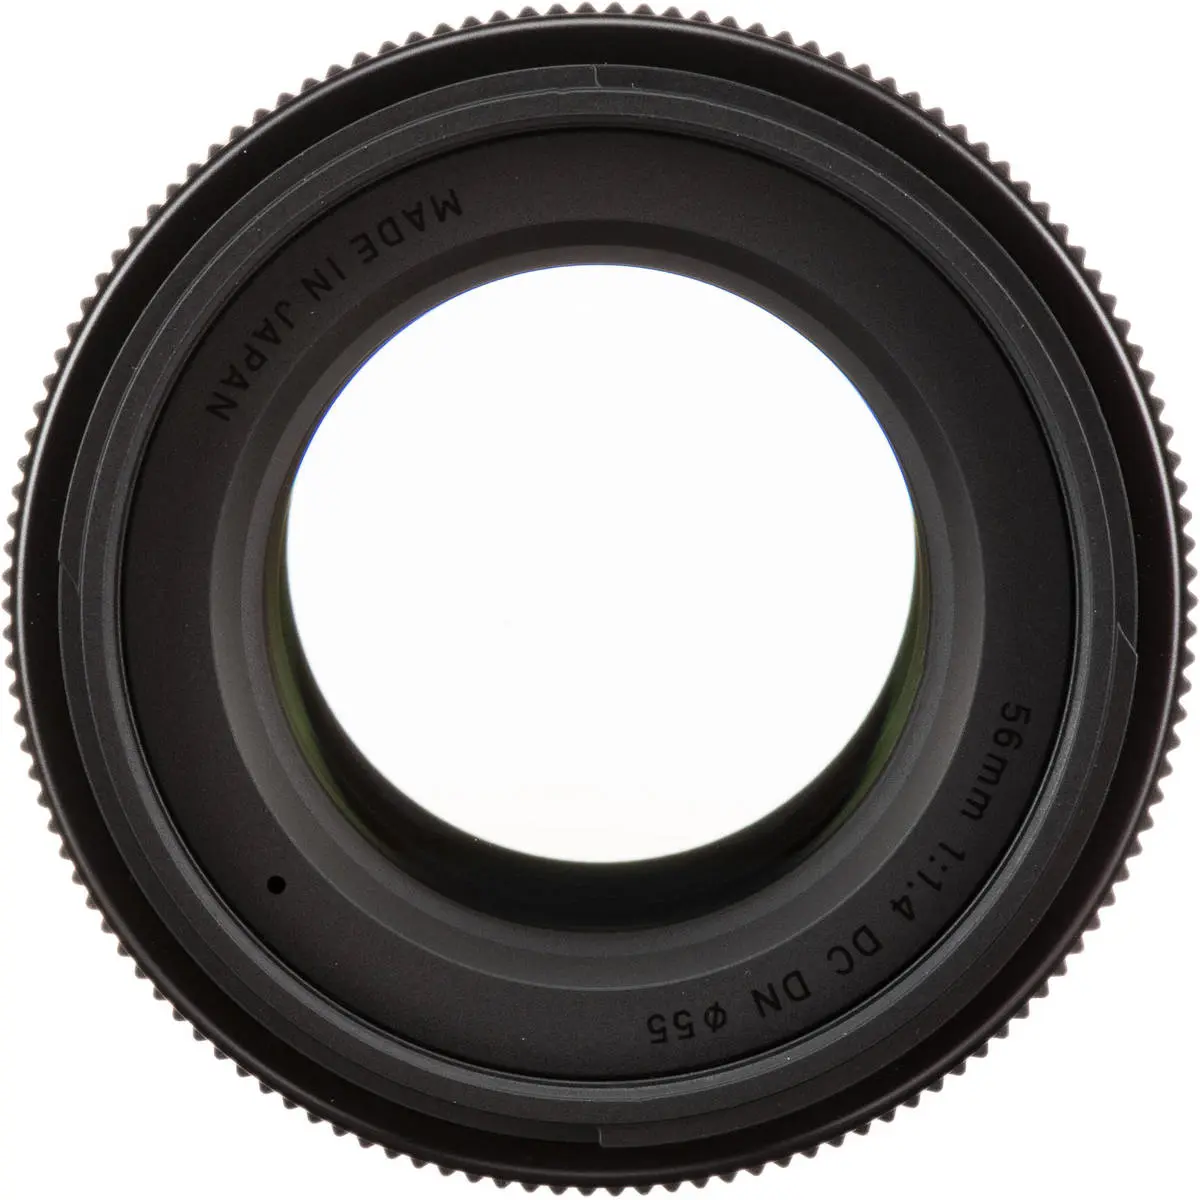 5. Sigma 56mm F1.4 DC DN | Contemporary (M4/3) Lens